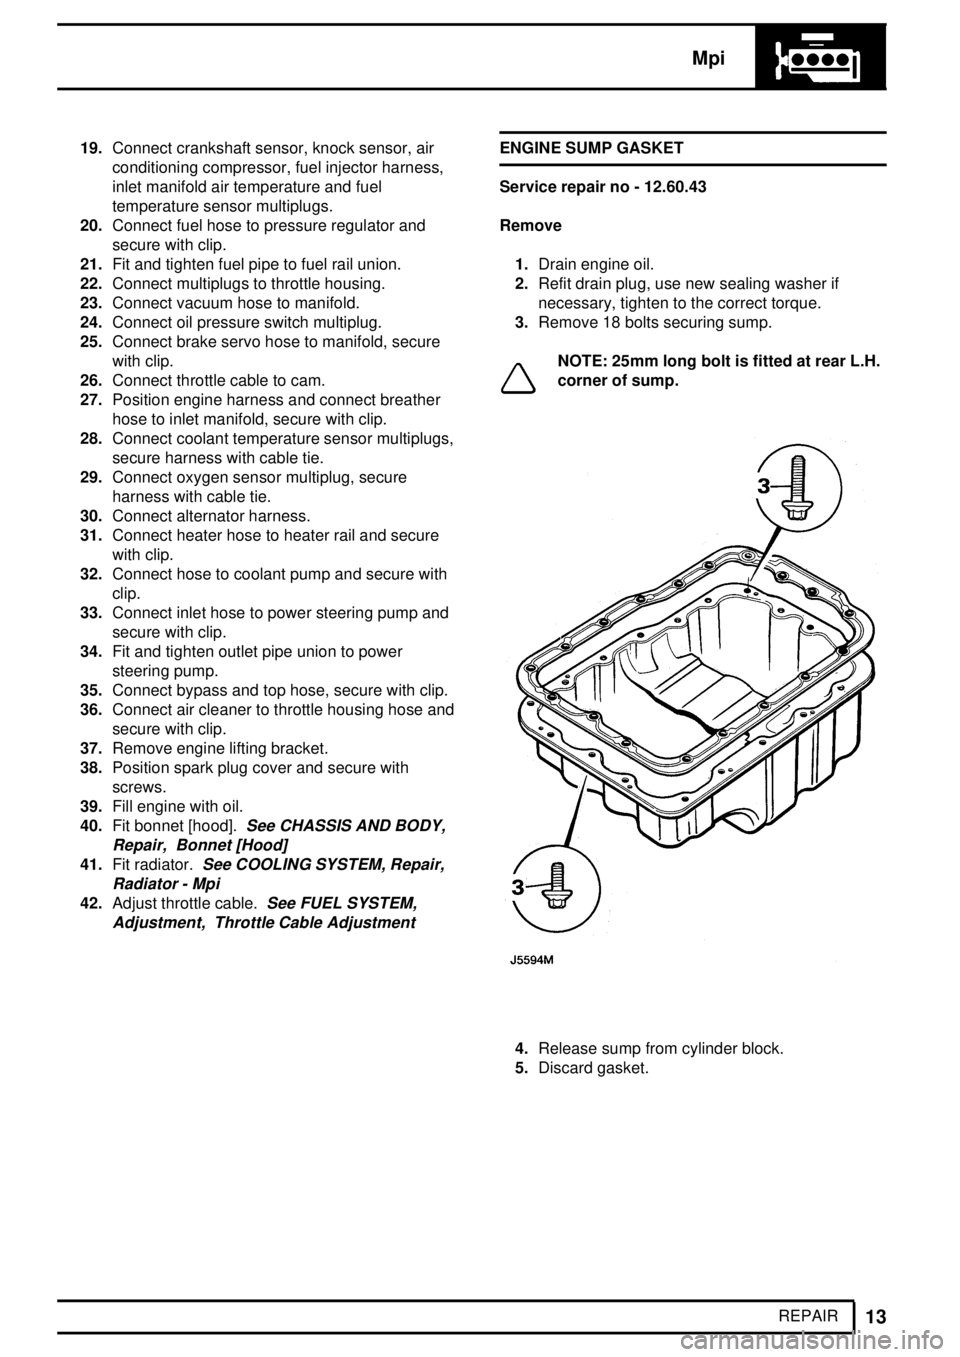 LAND ROVER DISCOVERY 1995  Workshop Manual Mpi
13
REPAIR 19.Connect crankshaft sensor, knock sensor, air
conditioning compressor, fuel injector harness,
inlet manifold air temperature and fuel
temperature sensor multiplugs.
20.Connect fuel hos